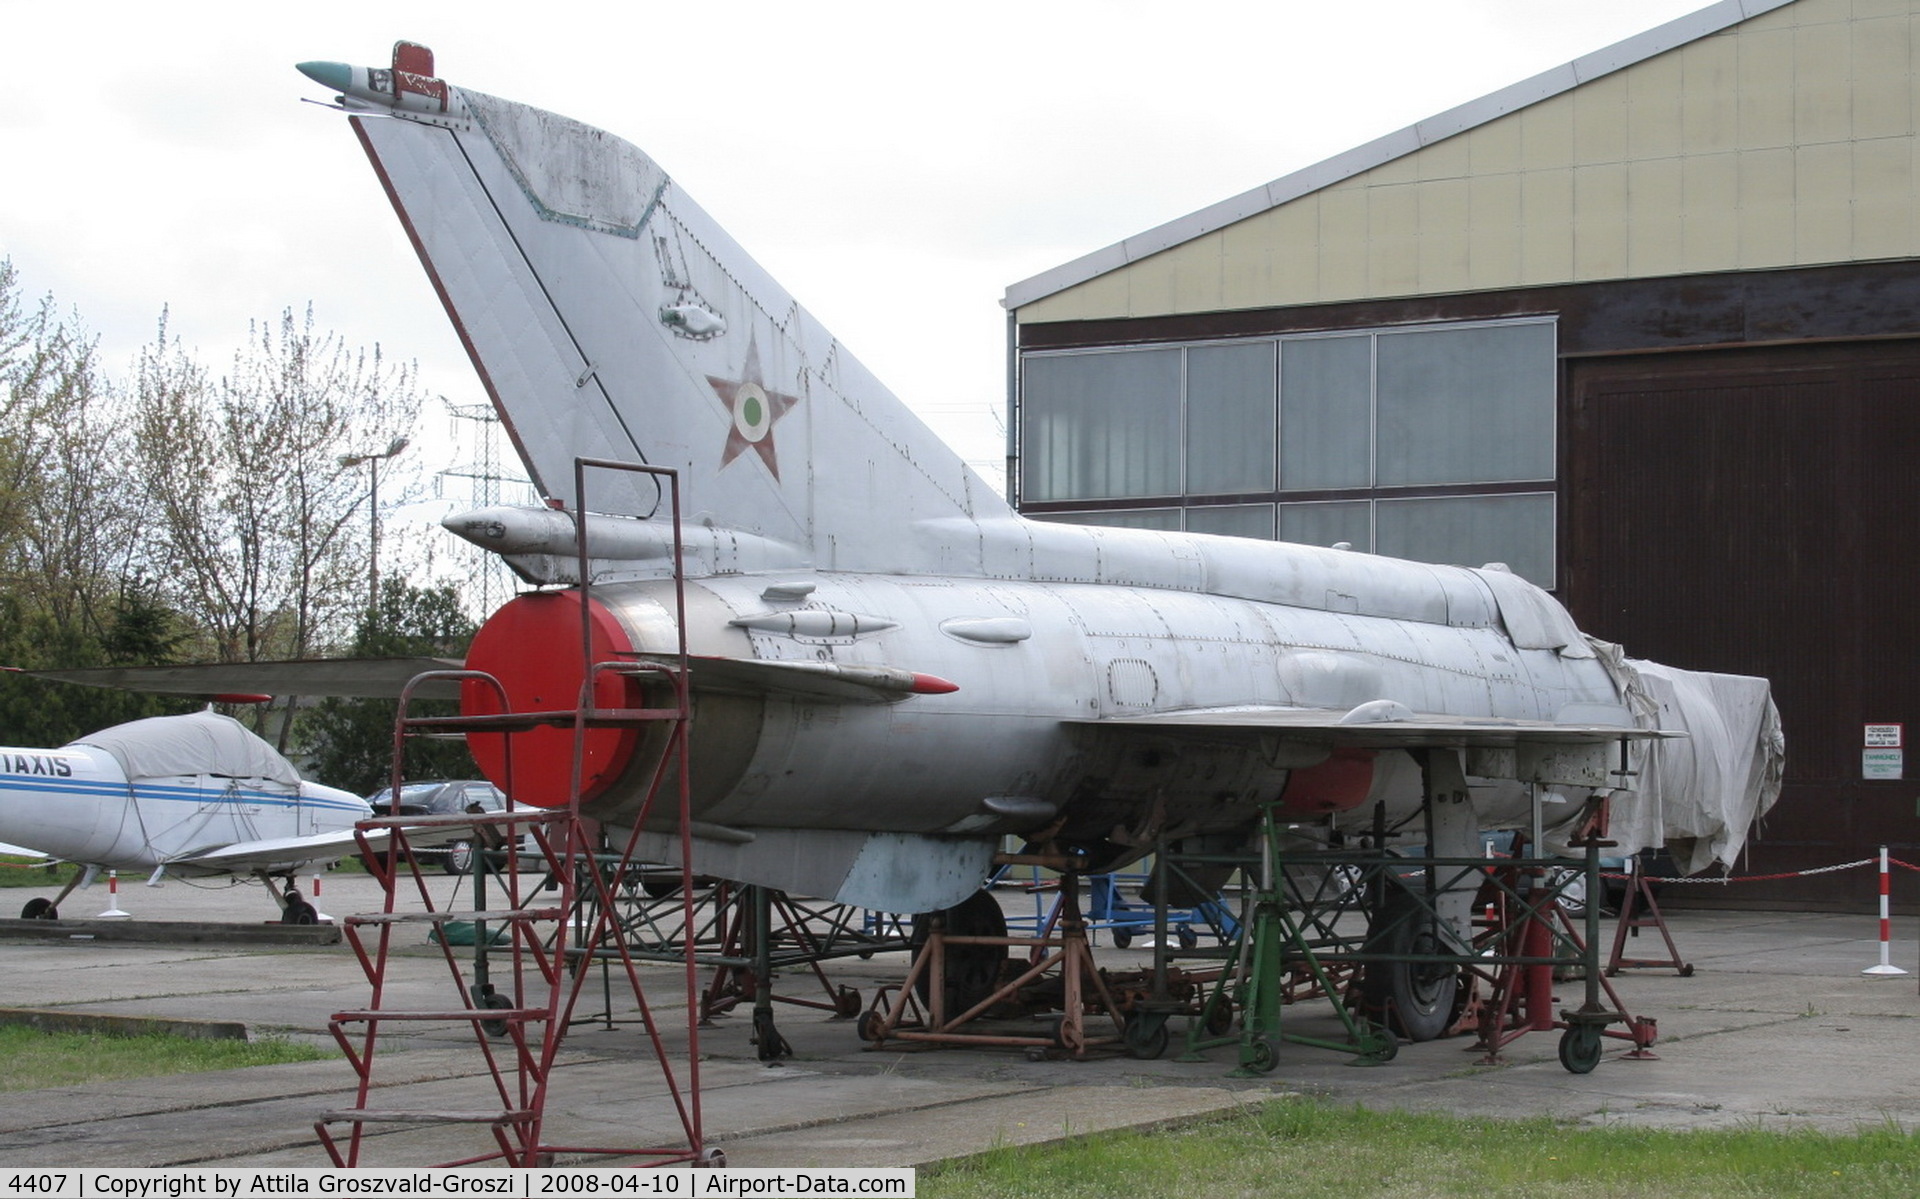 4407, 1971 Mikoyan-Gurevich MiG-21MF C/N 964407, Csepel, Lajos Kossuth Grammar school apprentice workshop's yard - Hungary